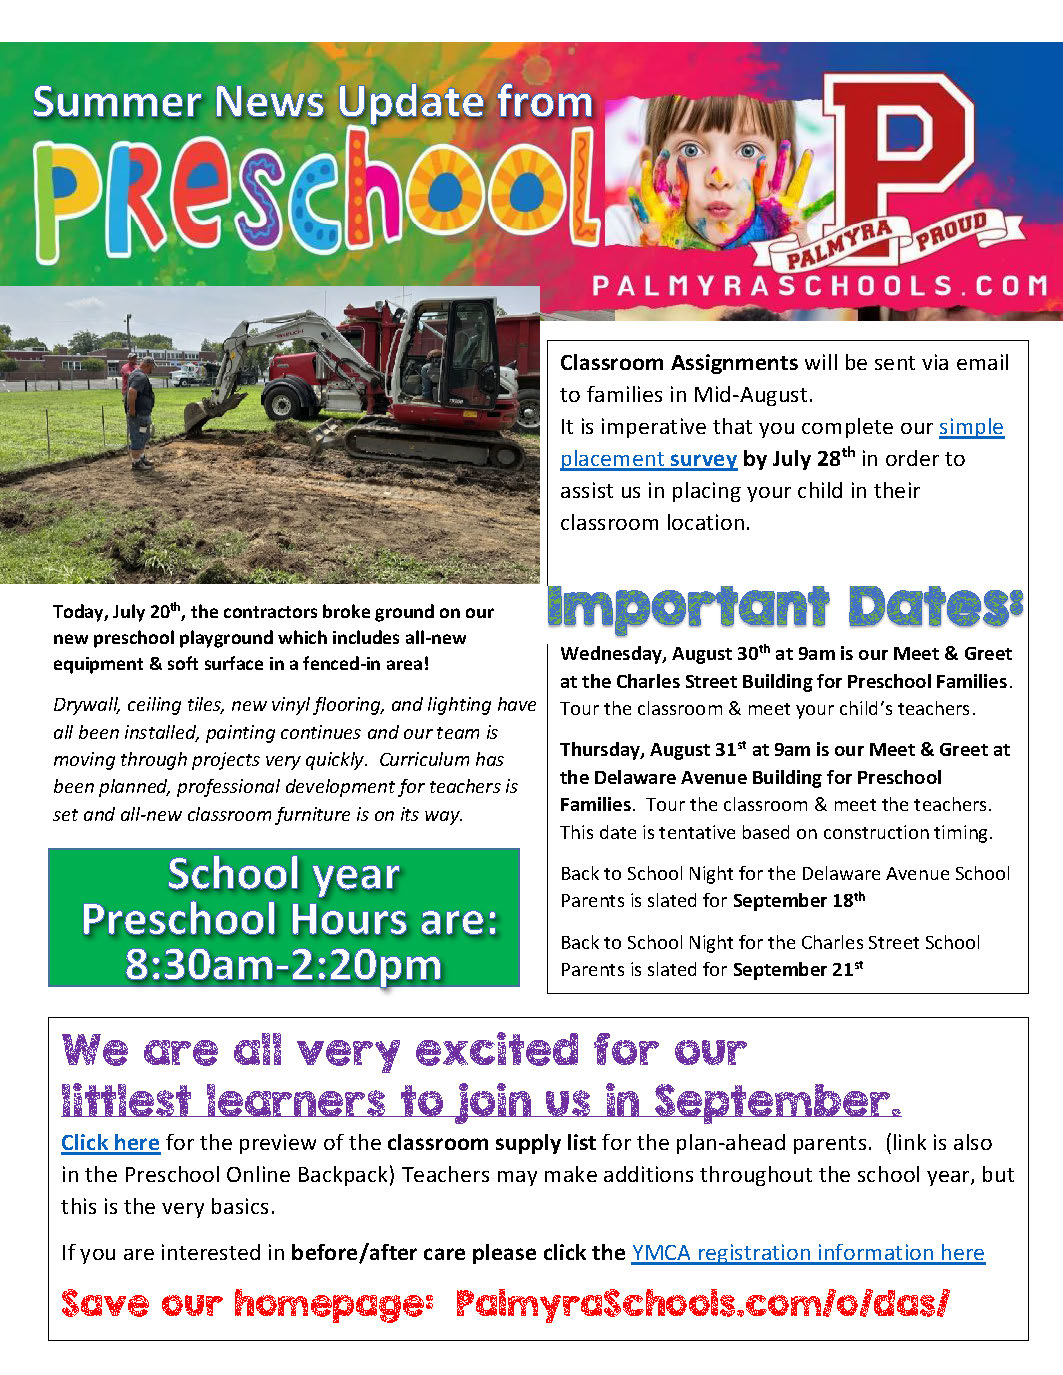 Preschool News Update July 20 